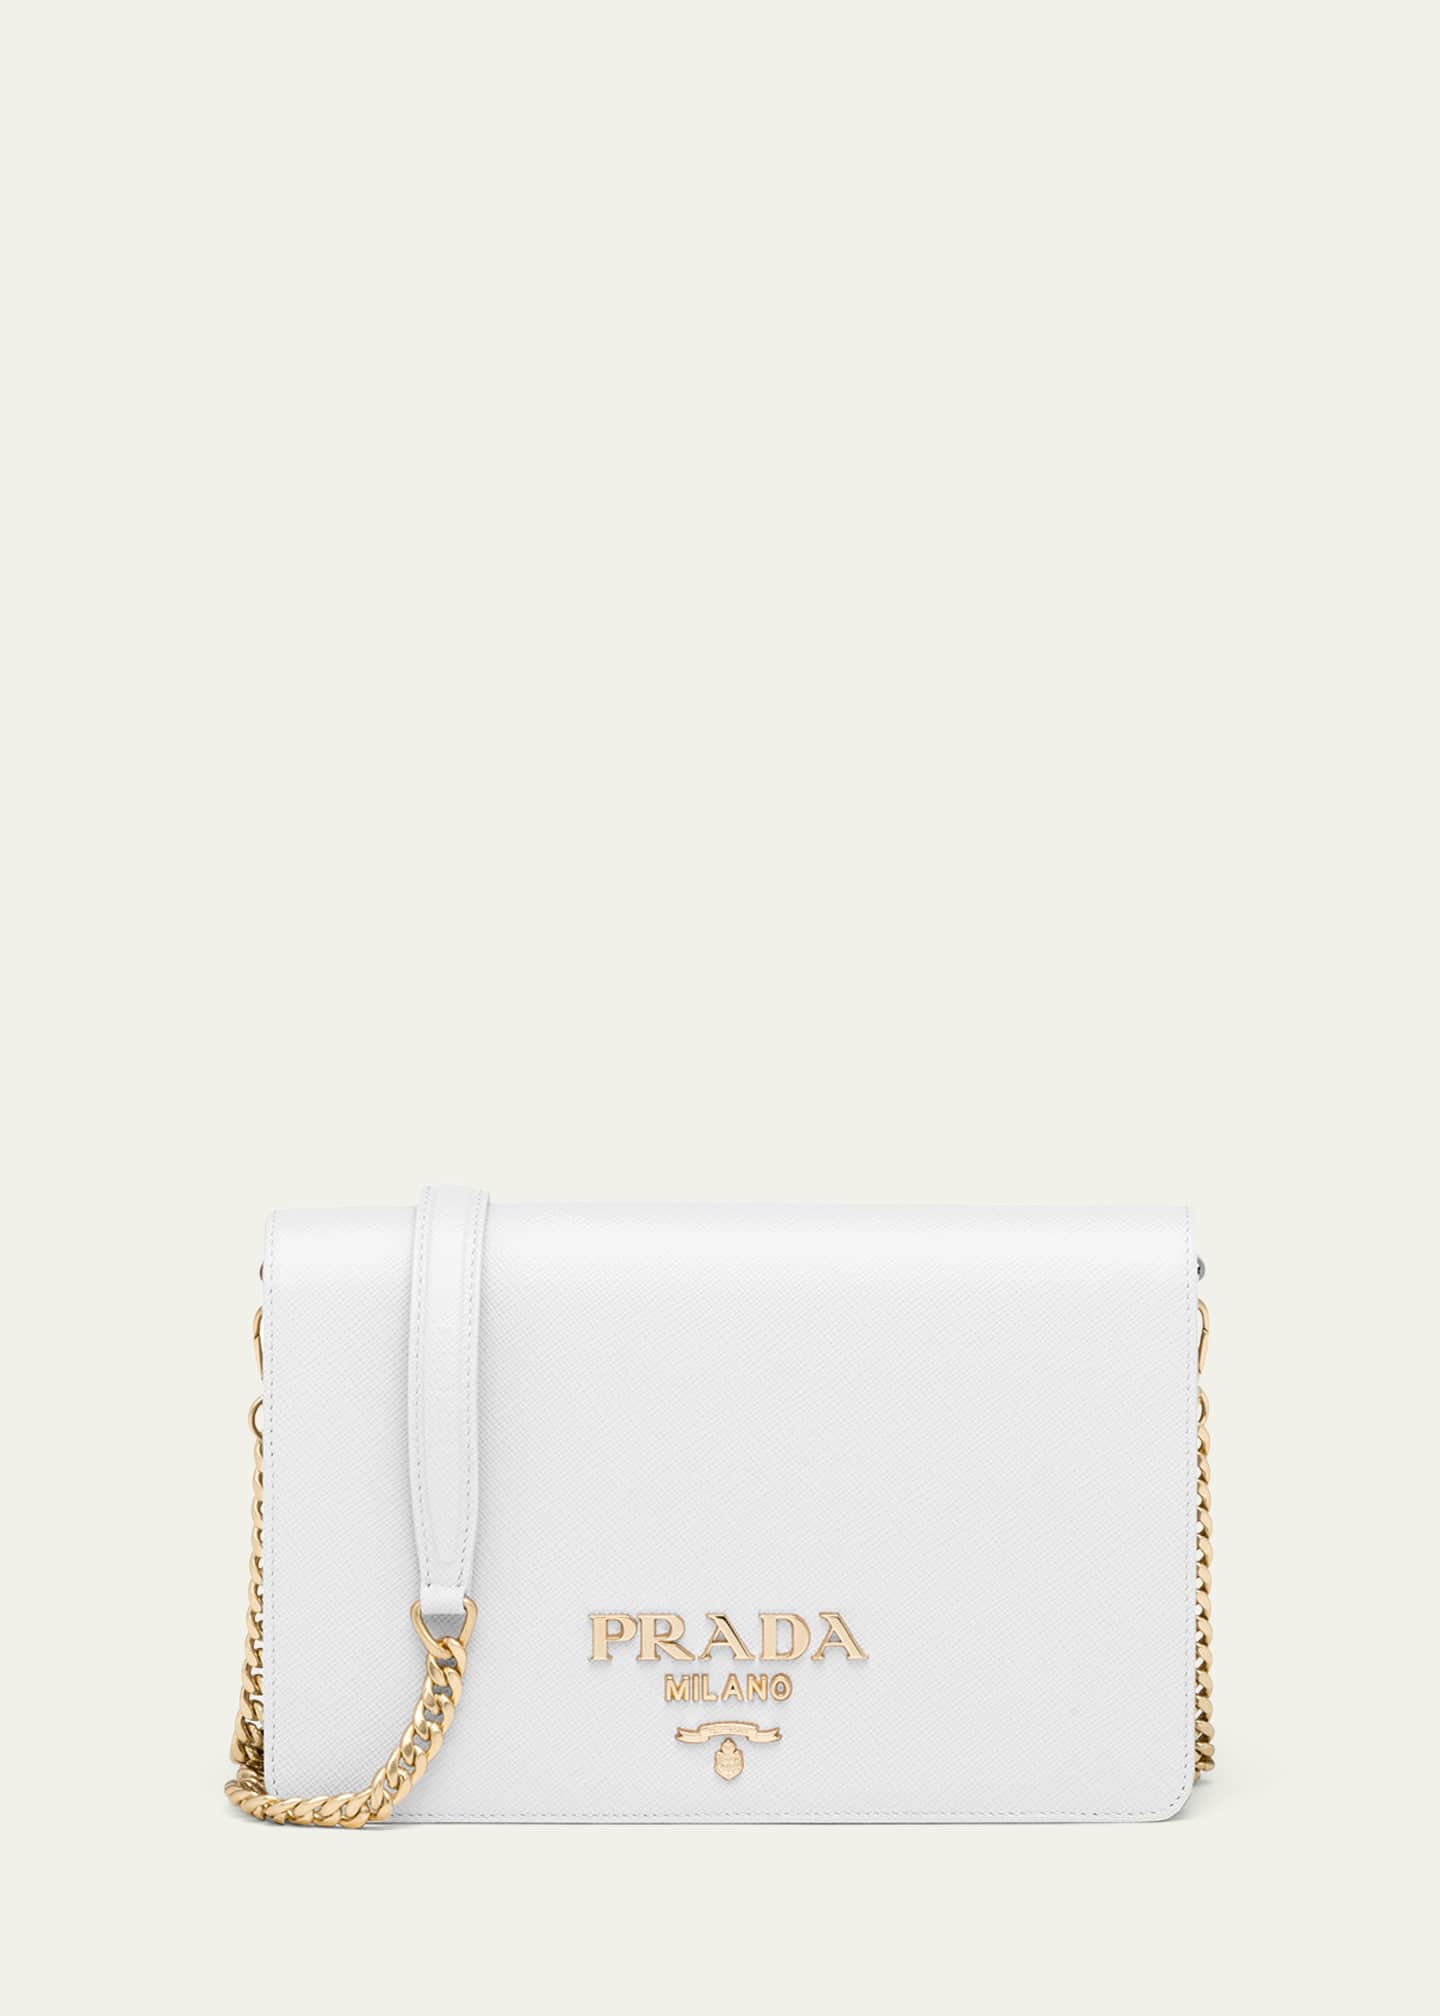 Prada Women's Mini Saffiano Leather Shoulder Bag